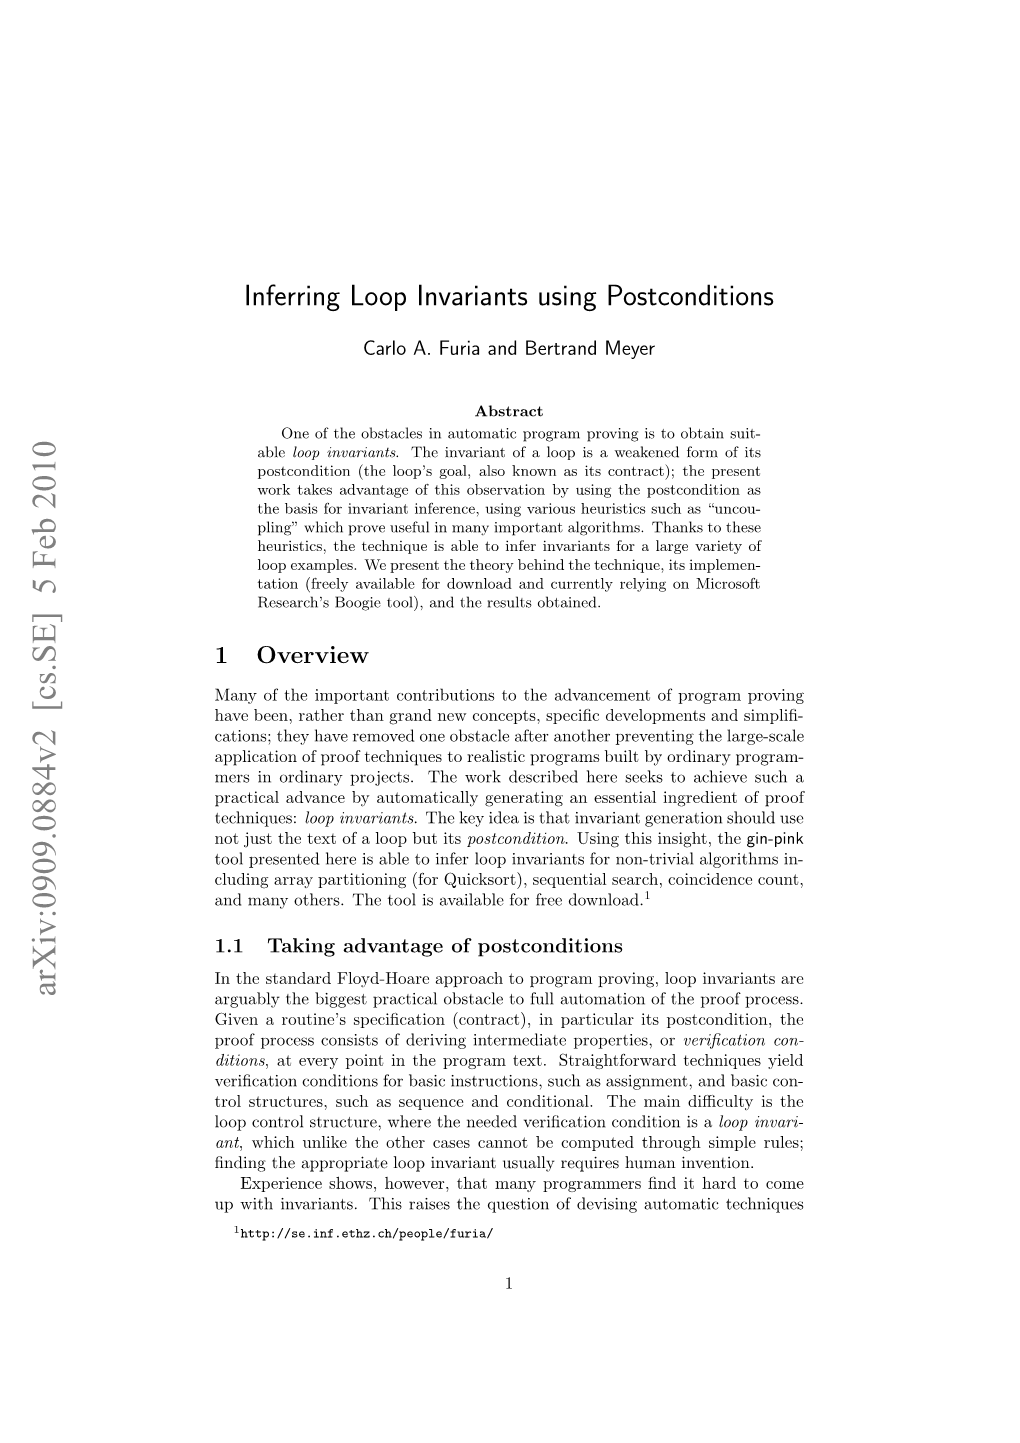 Inferring Loop Invariants Using Postconditions